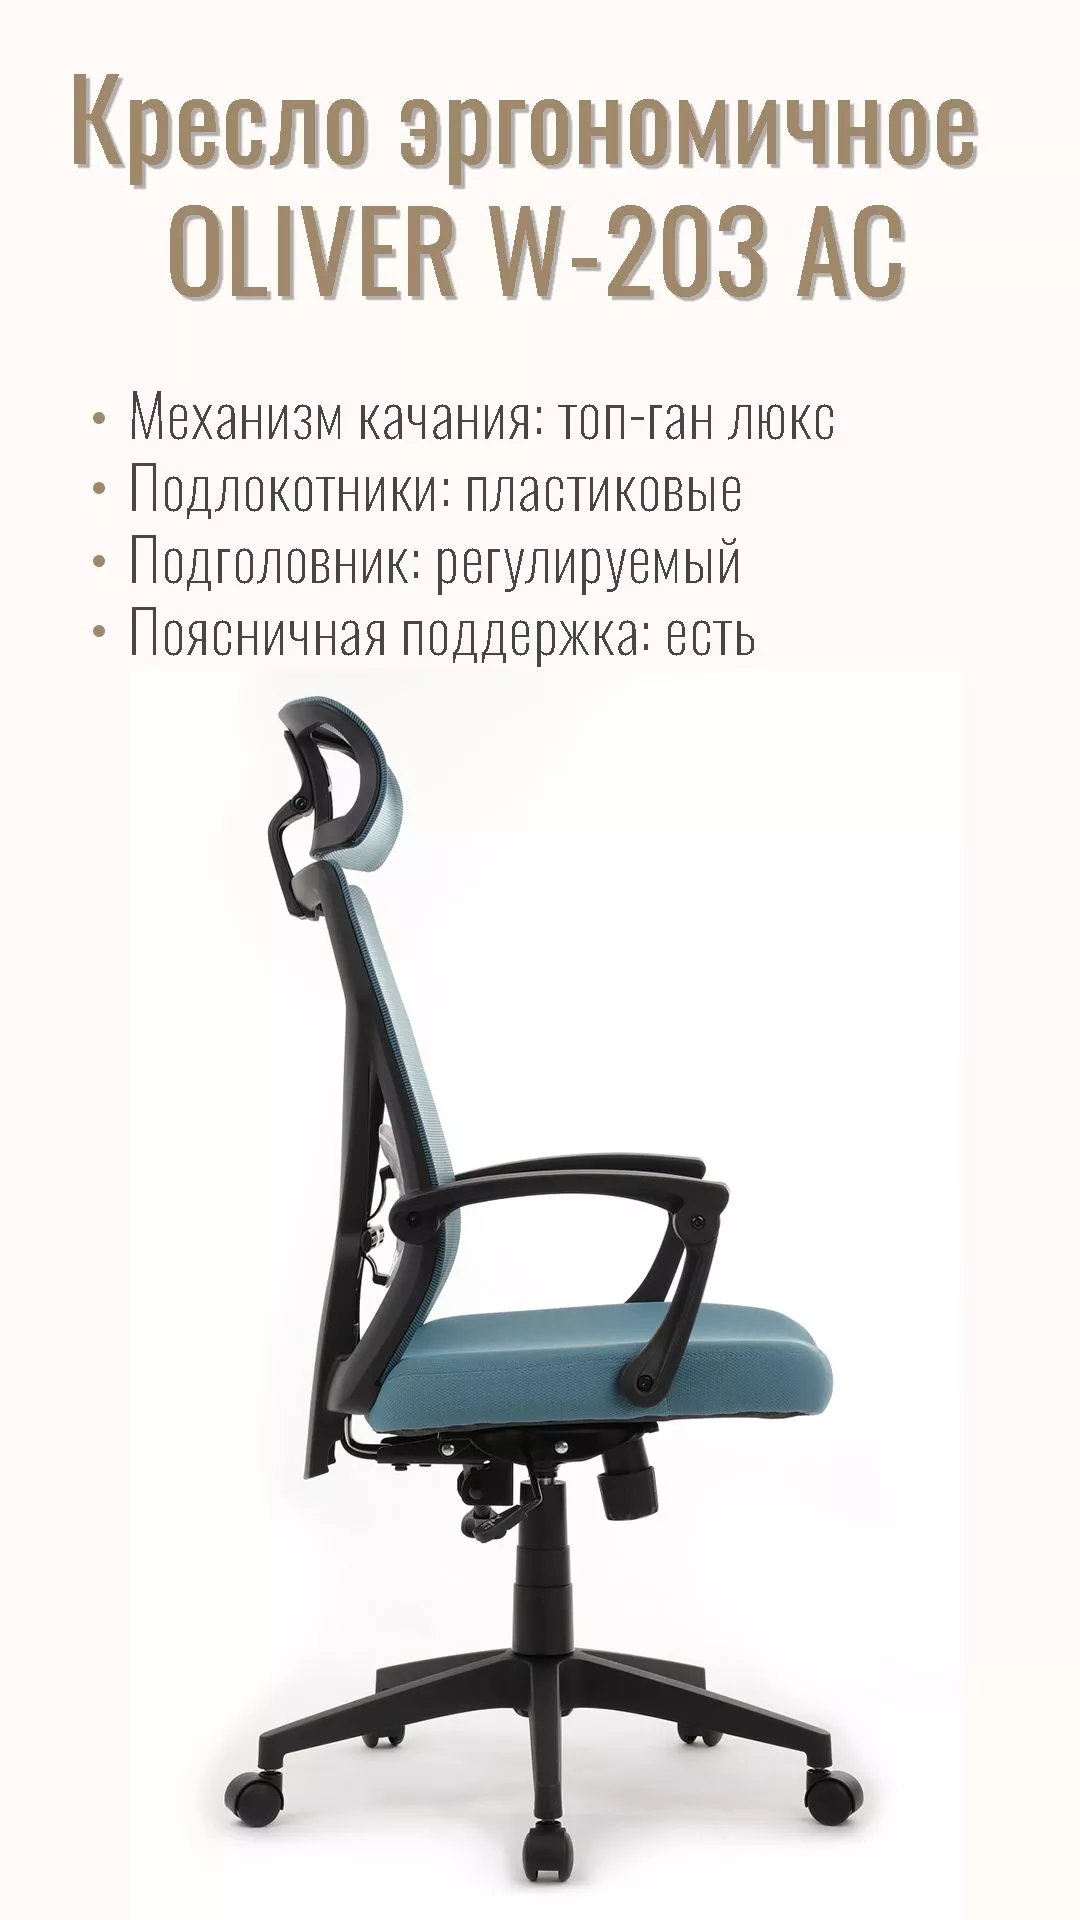 Кресло RIVA Chair OLIVER W-203 AC черный пластик / синий